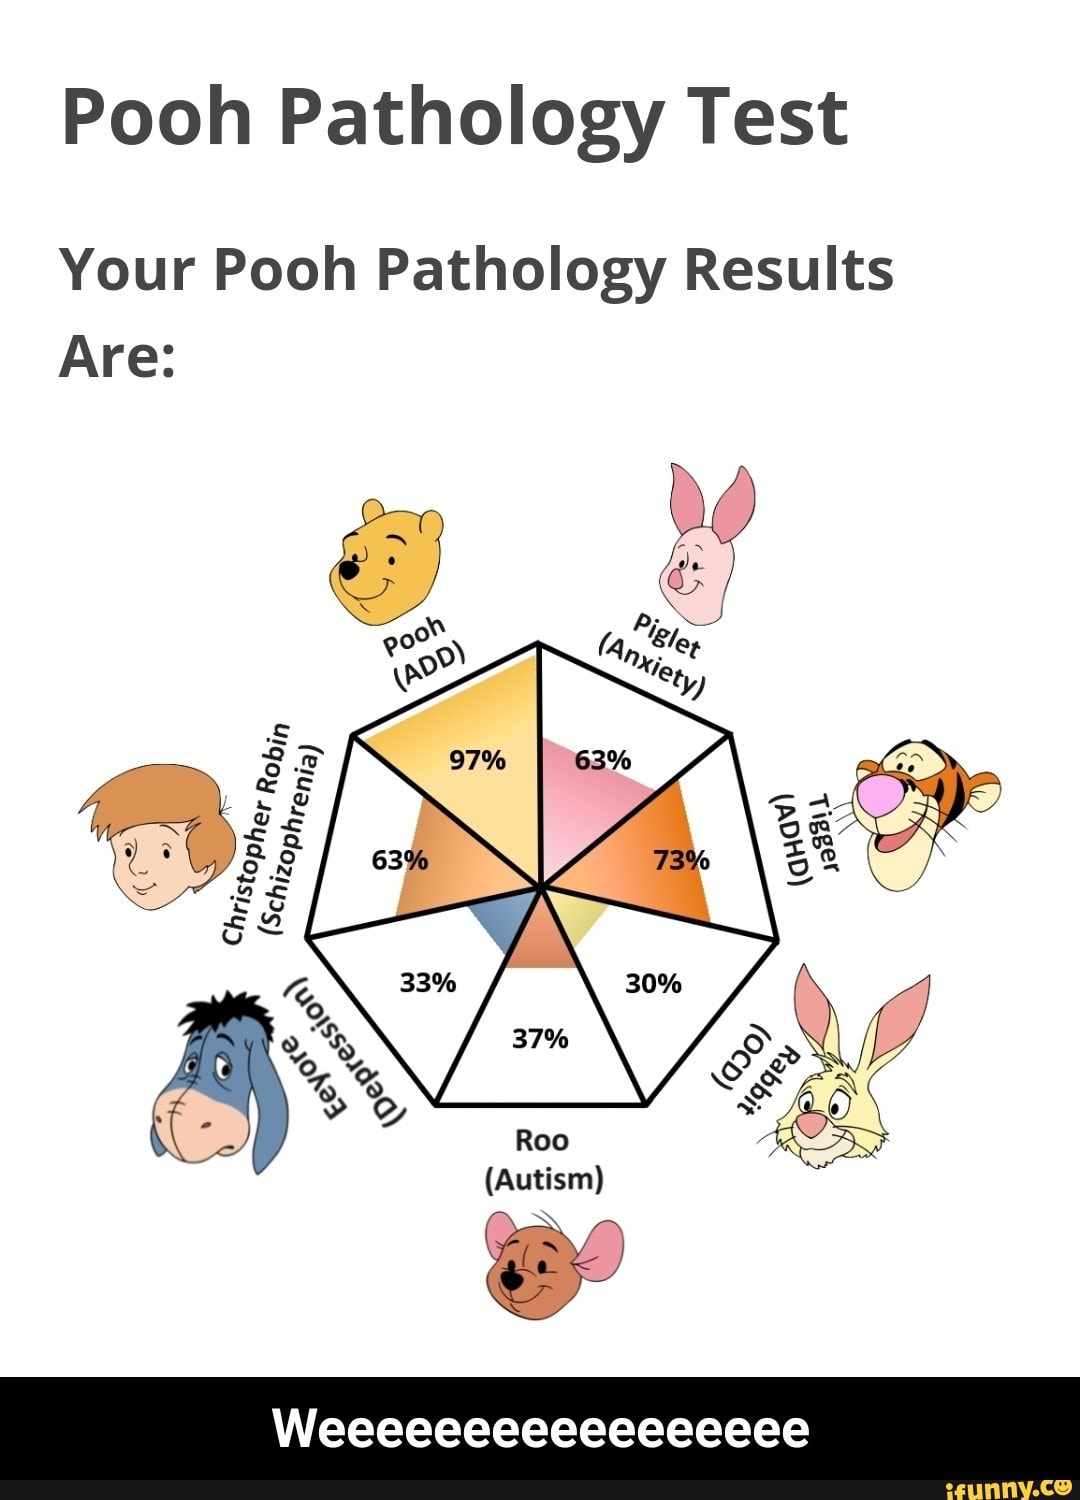 Pooh pathology test